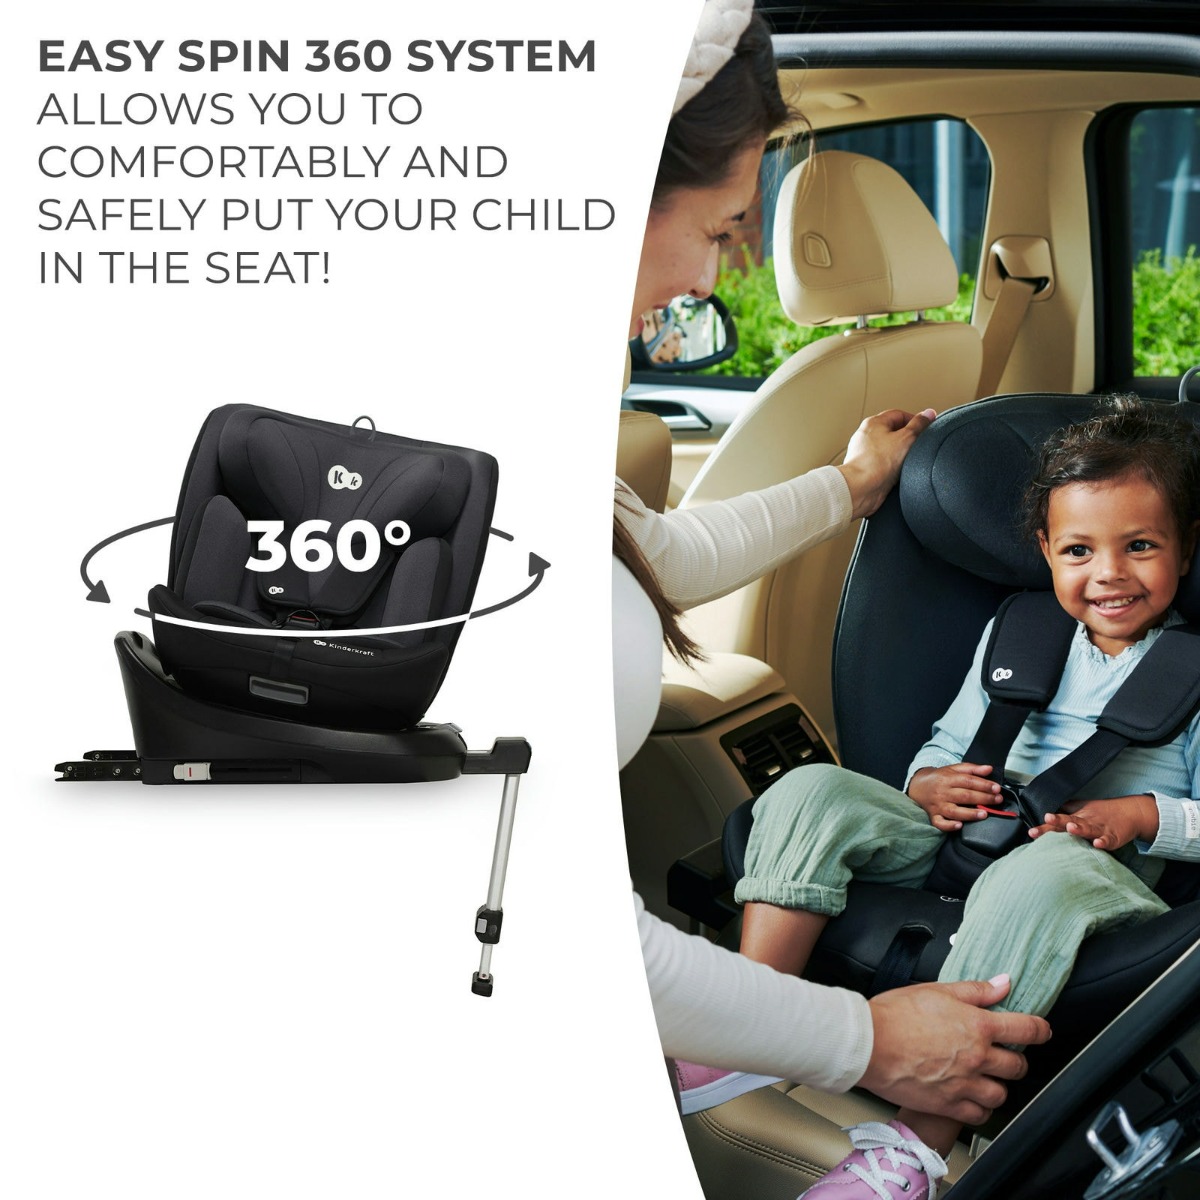 Car seat I-360 i-Size black